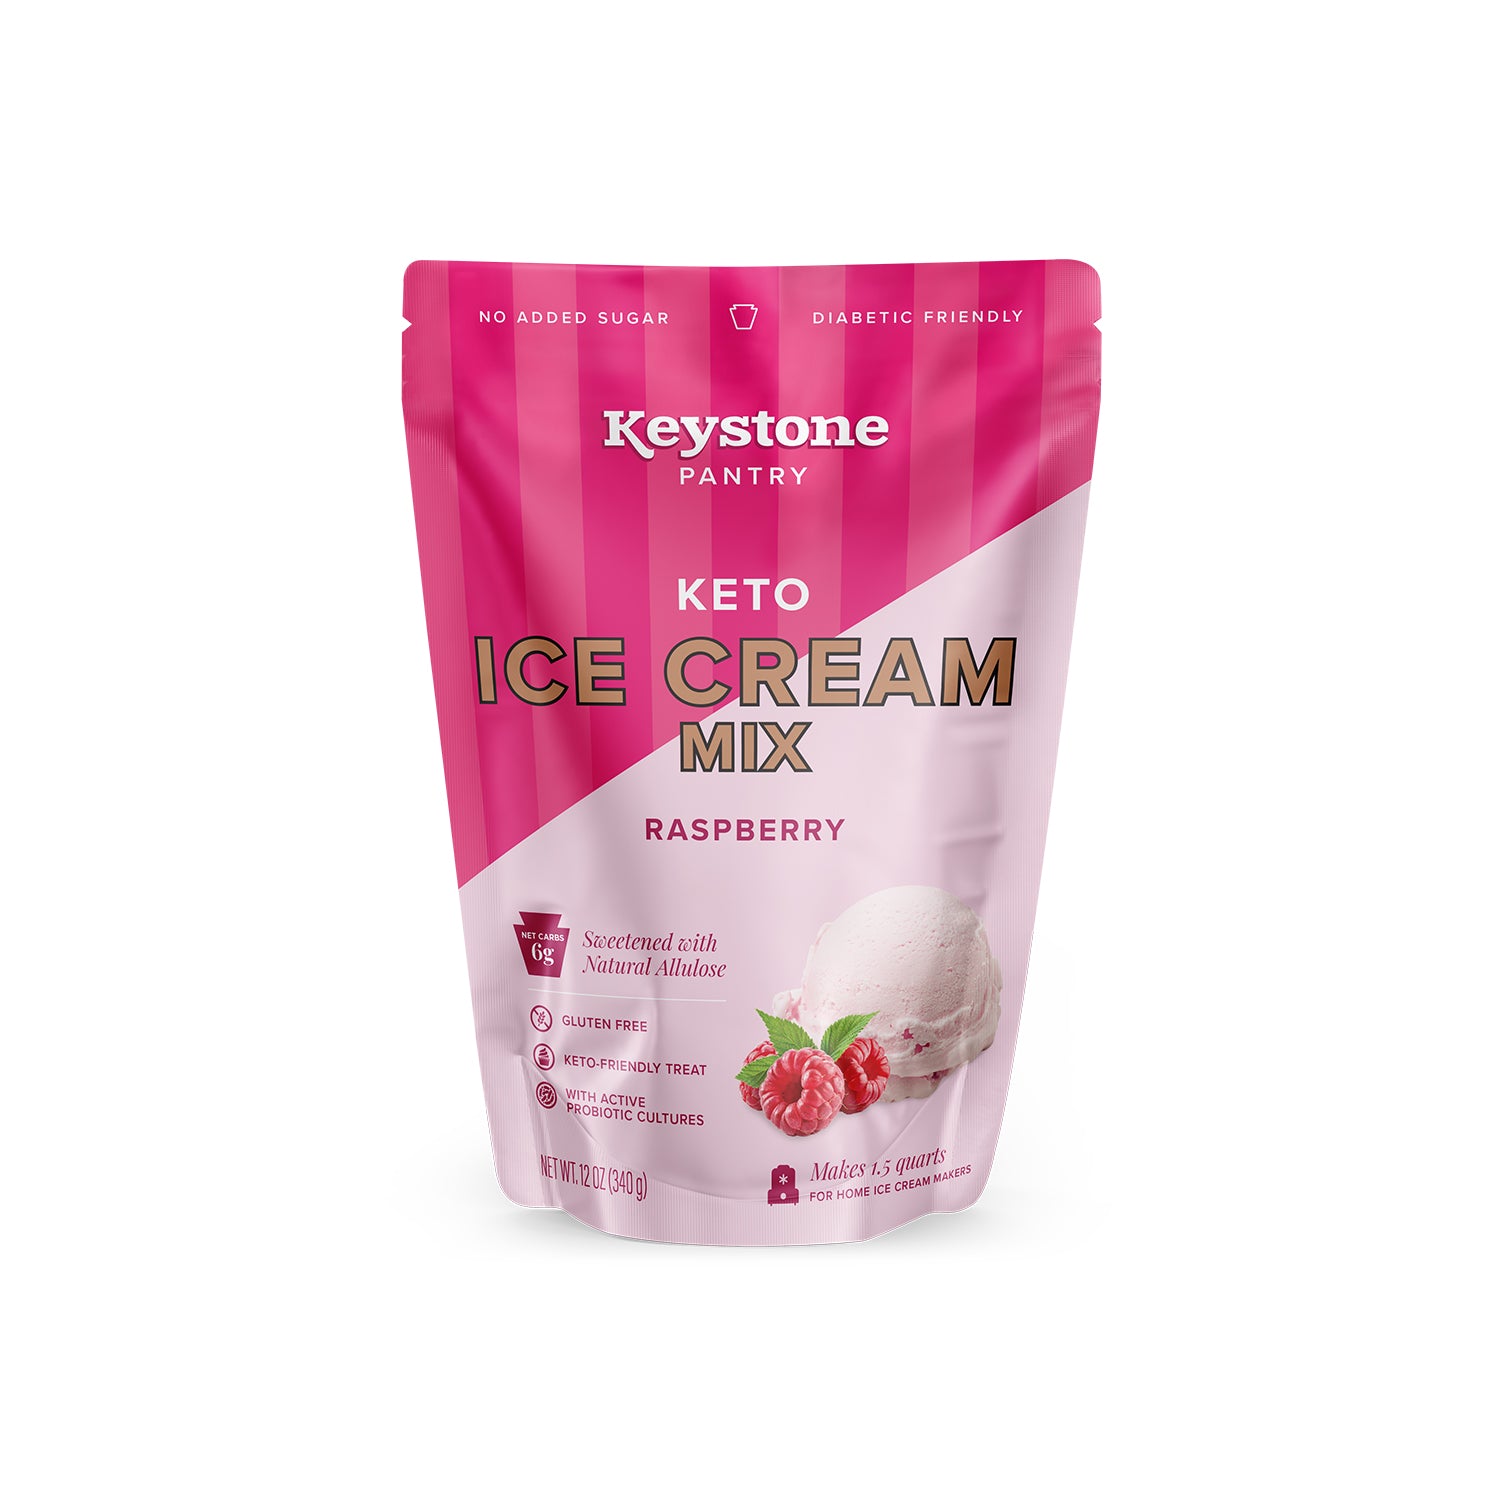 Keystone Pantry Keto Ice Cream Mix Raspberry With Probiotic Cultures